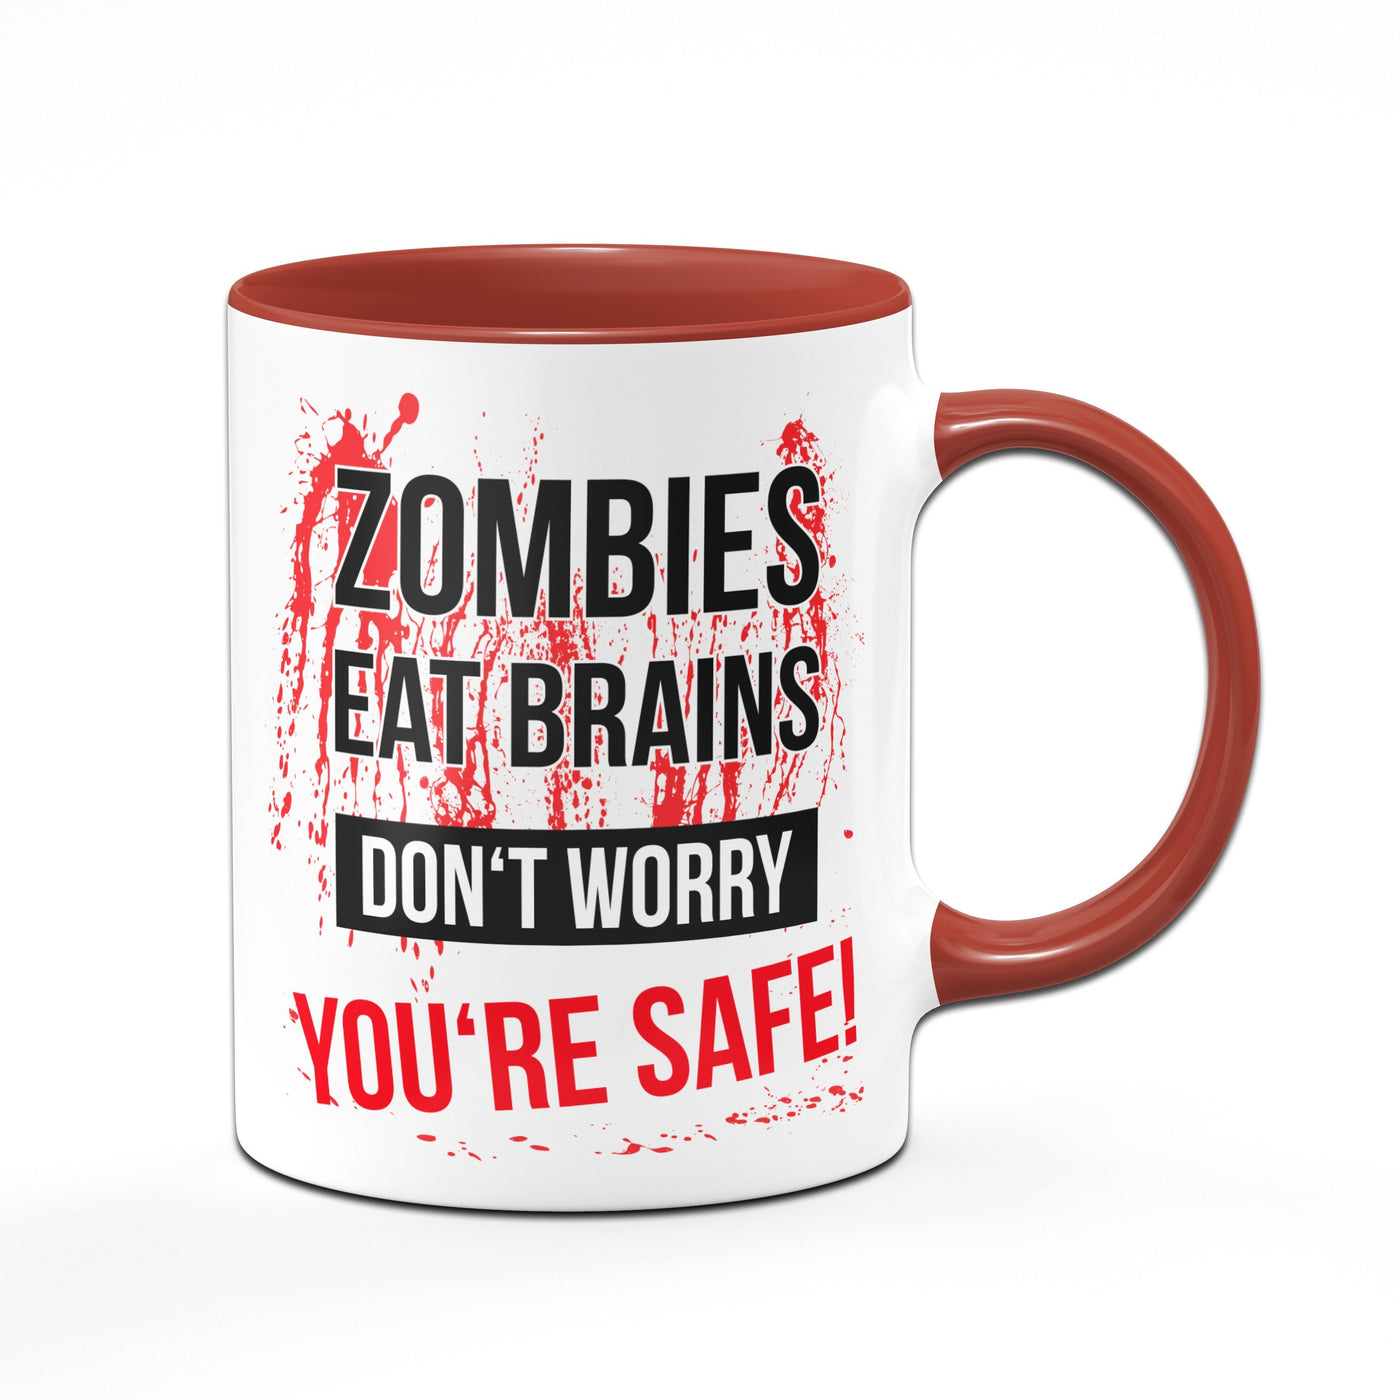 Bild: Tasse - Zombies eat brains - rot Geschenkidee